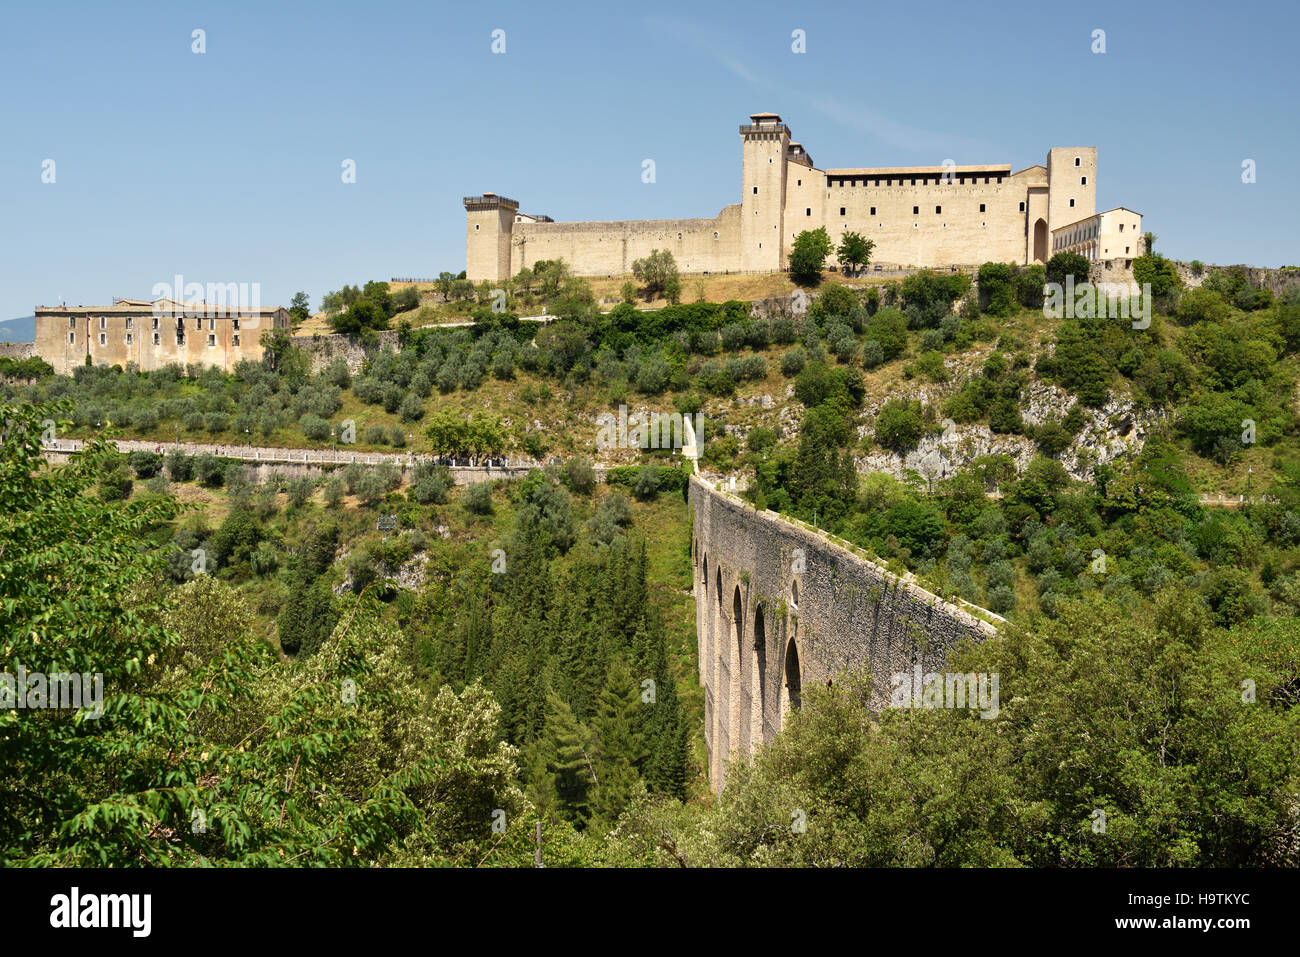 The Tower's Bridge with the Rocca Albornoziana fortress, Spoleto, Umbria, Italy Stock Photo